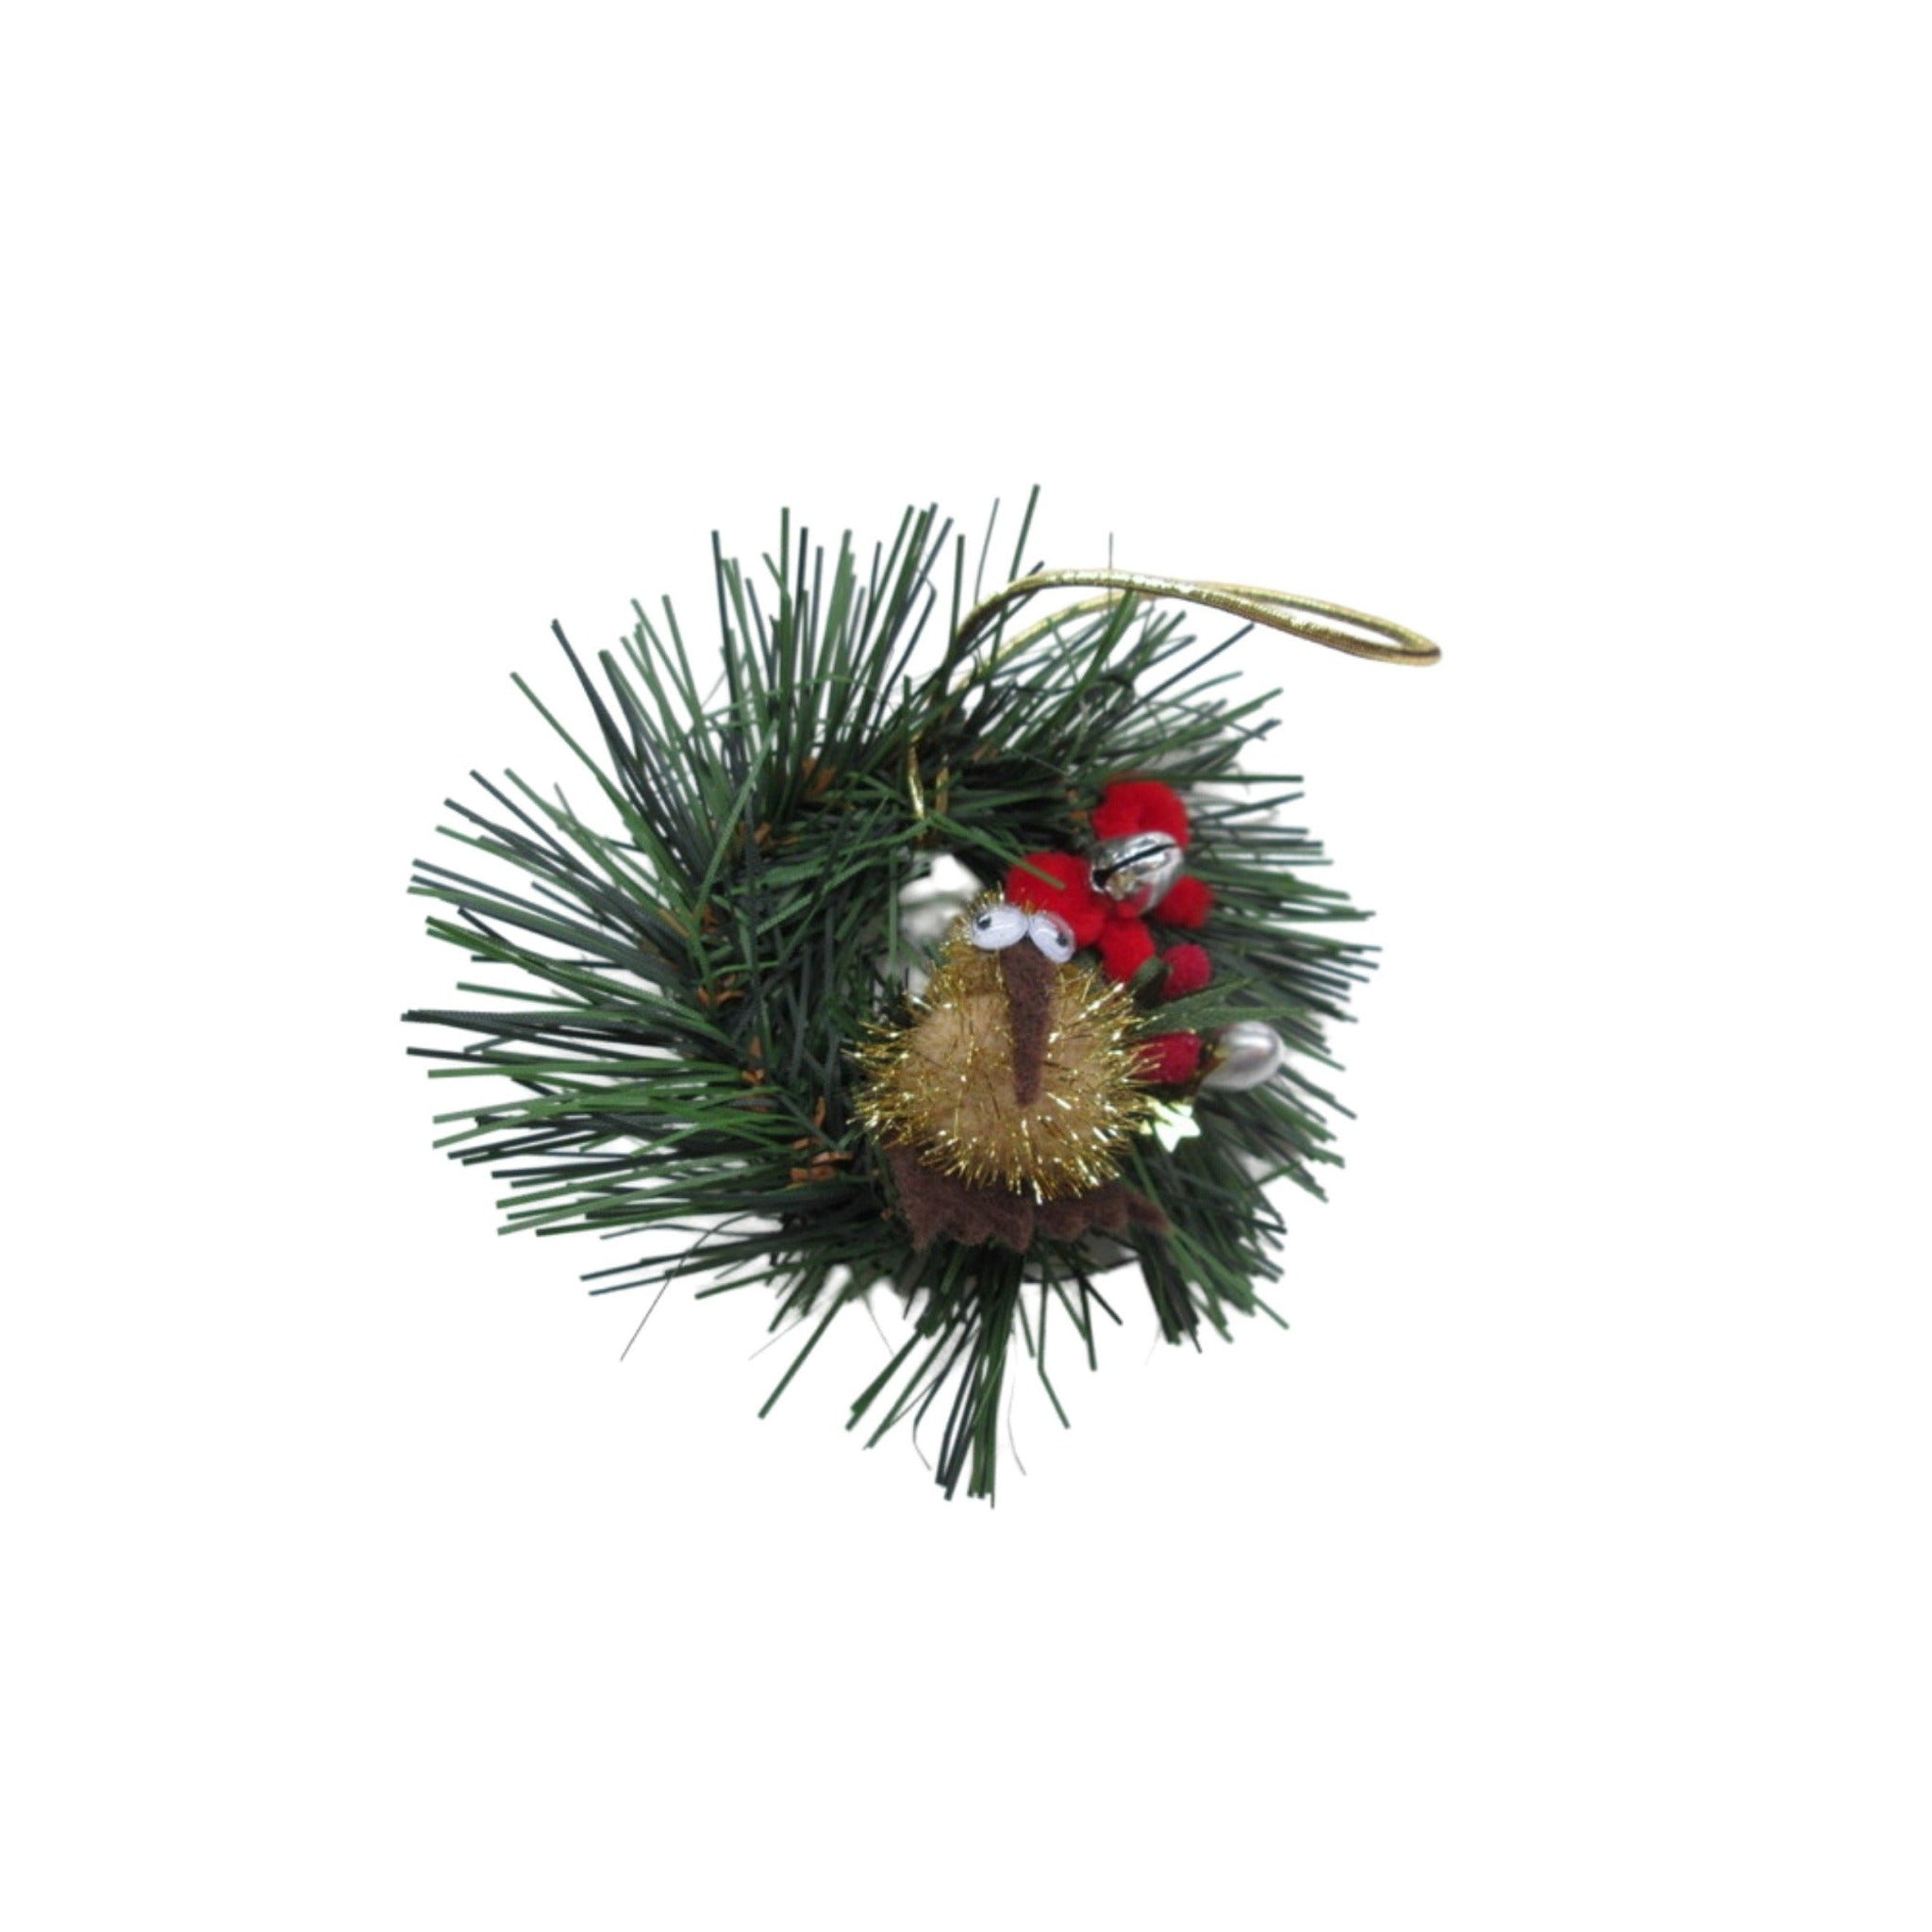 christmas kiwi decoration on wreath made in new zealand